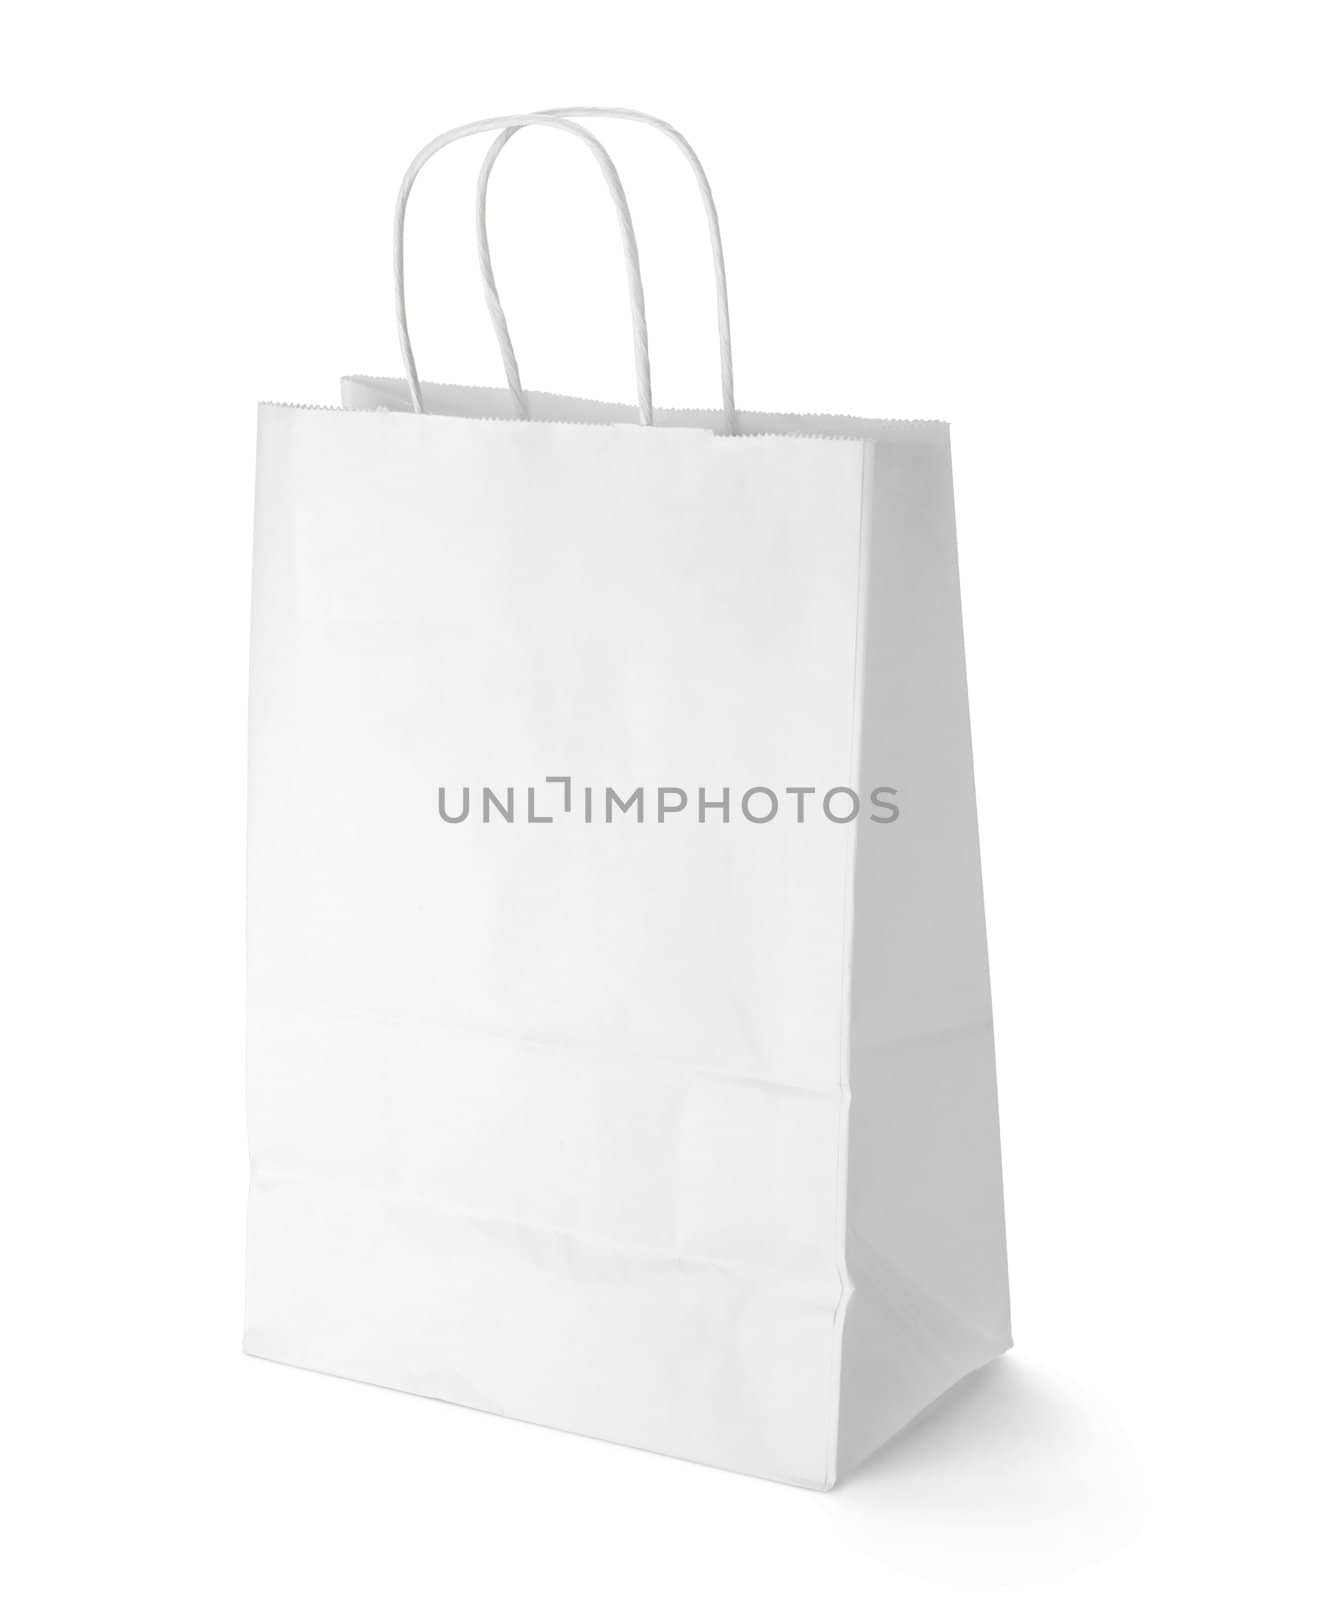 A blank white shopping bags